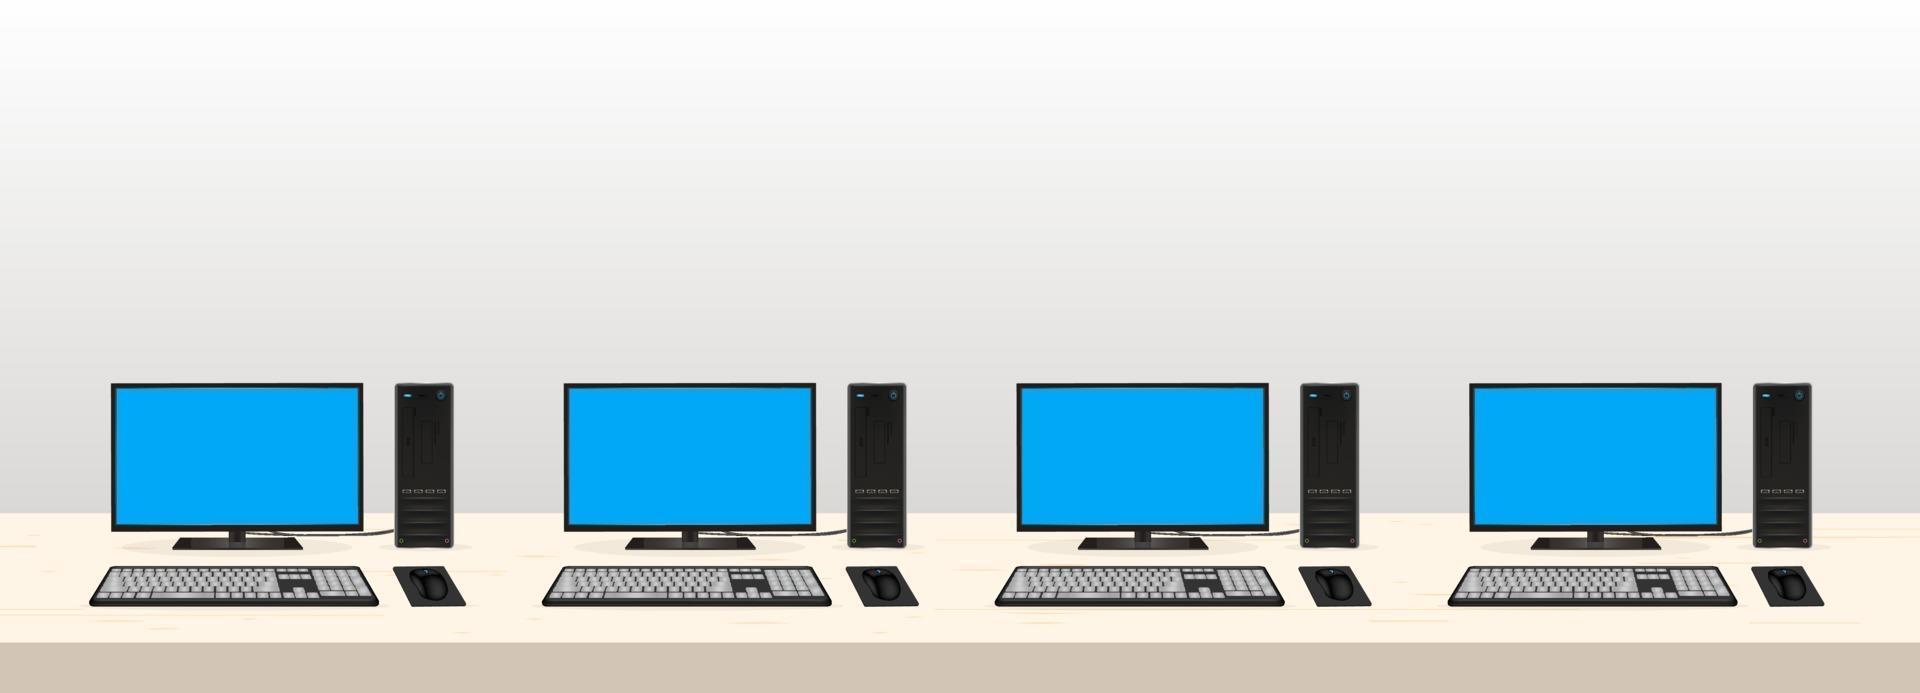 desktop computer café set vector